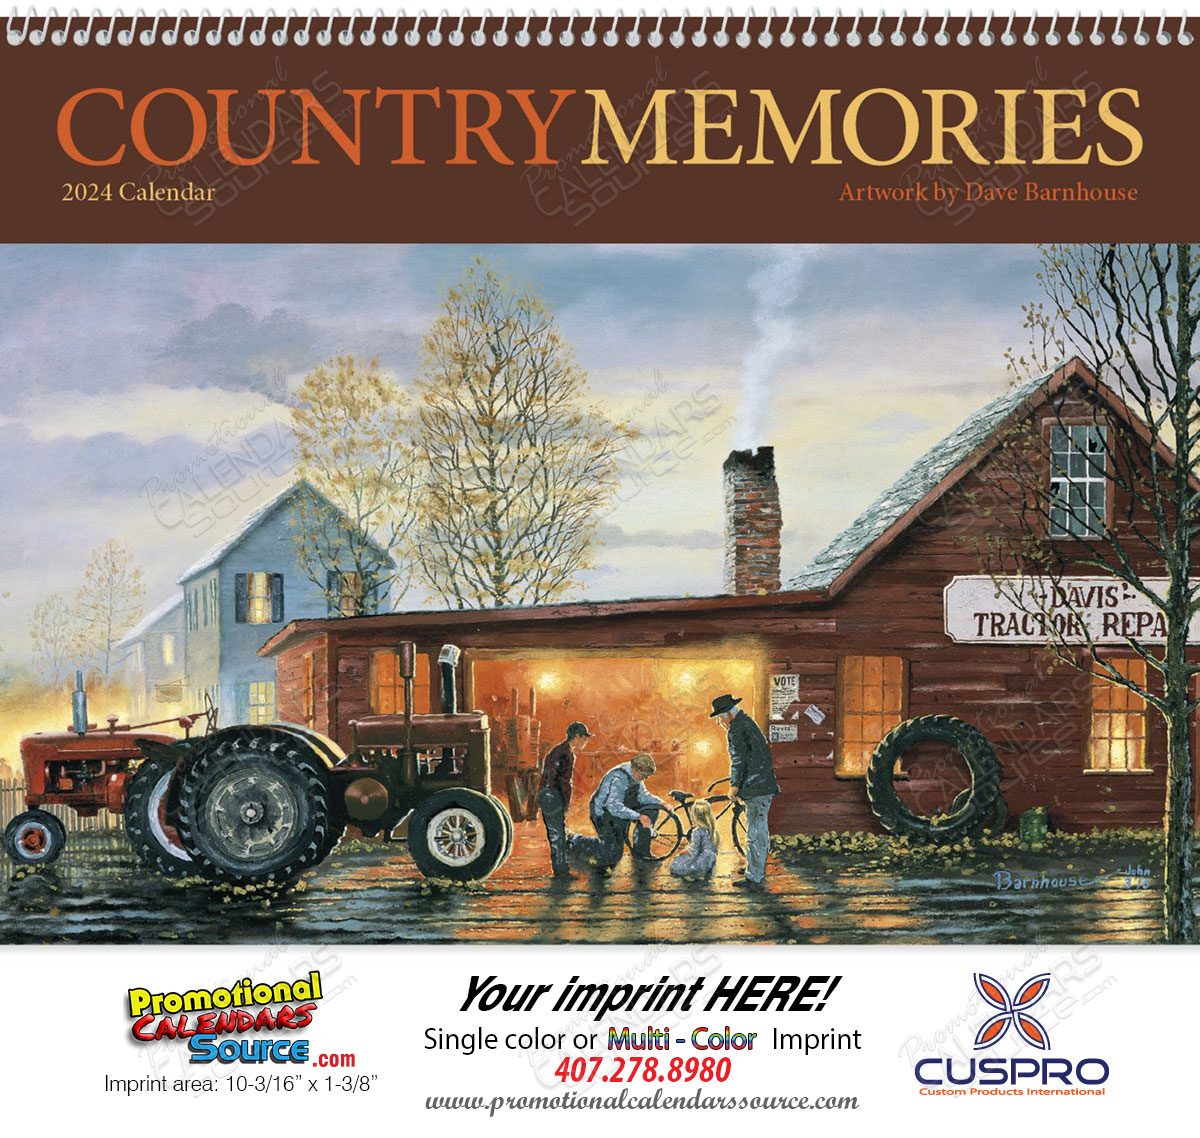 Country Memories Promotional Calendar 